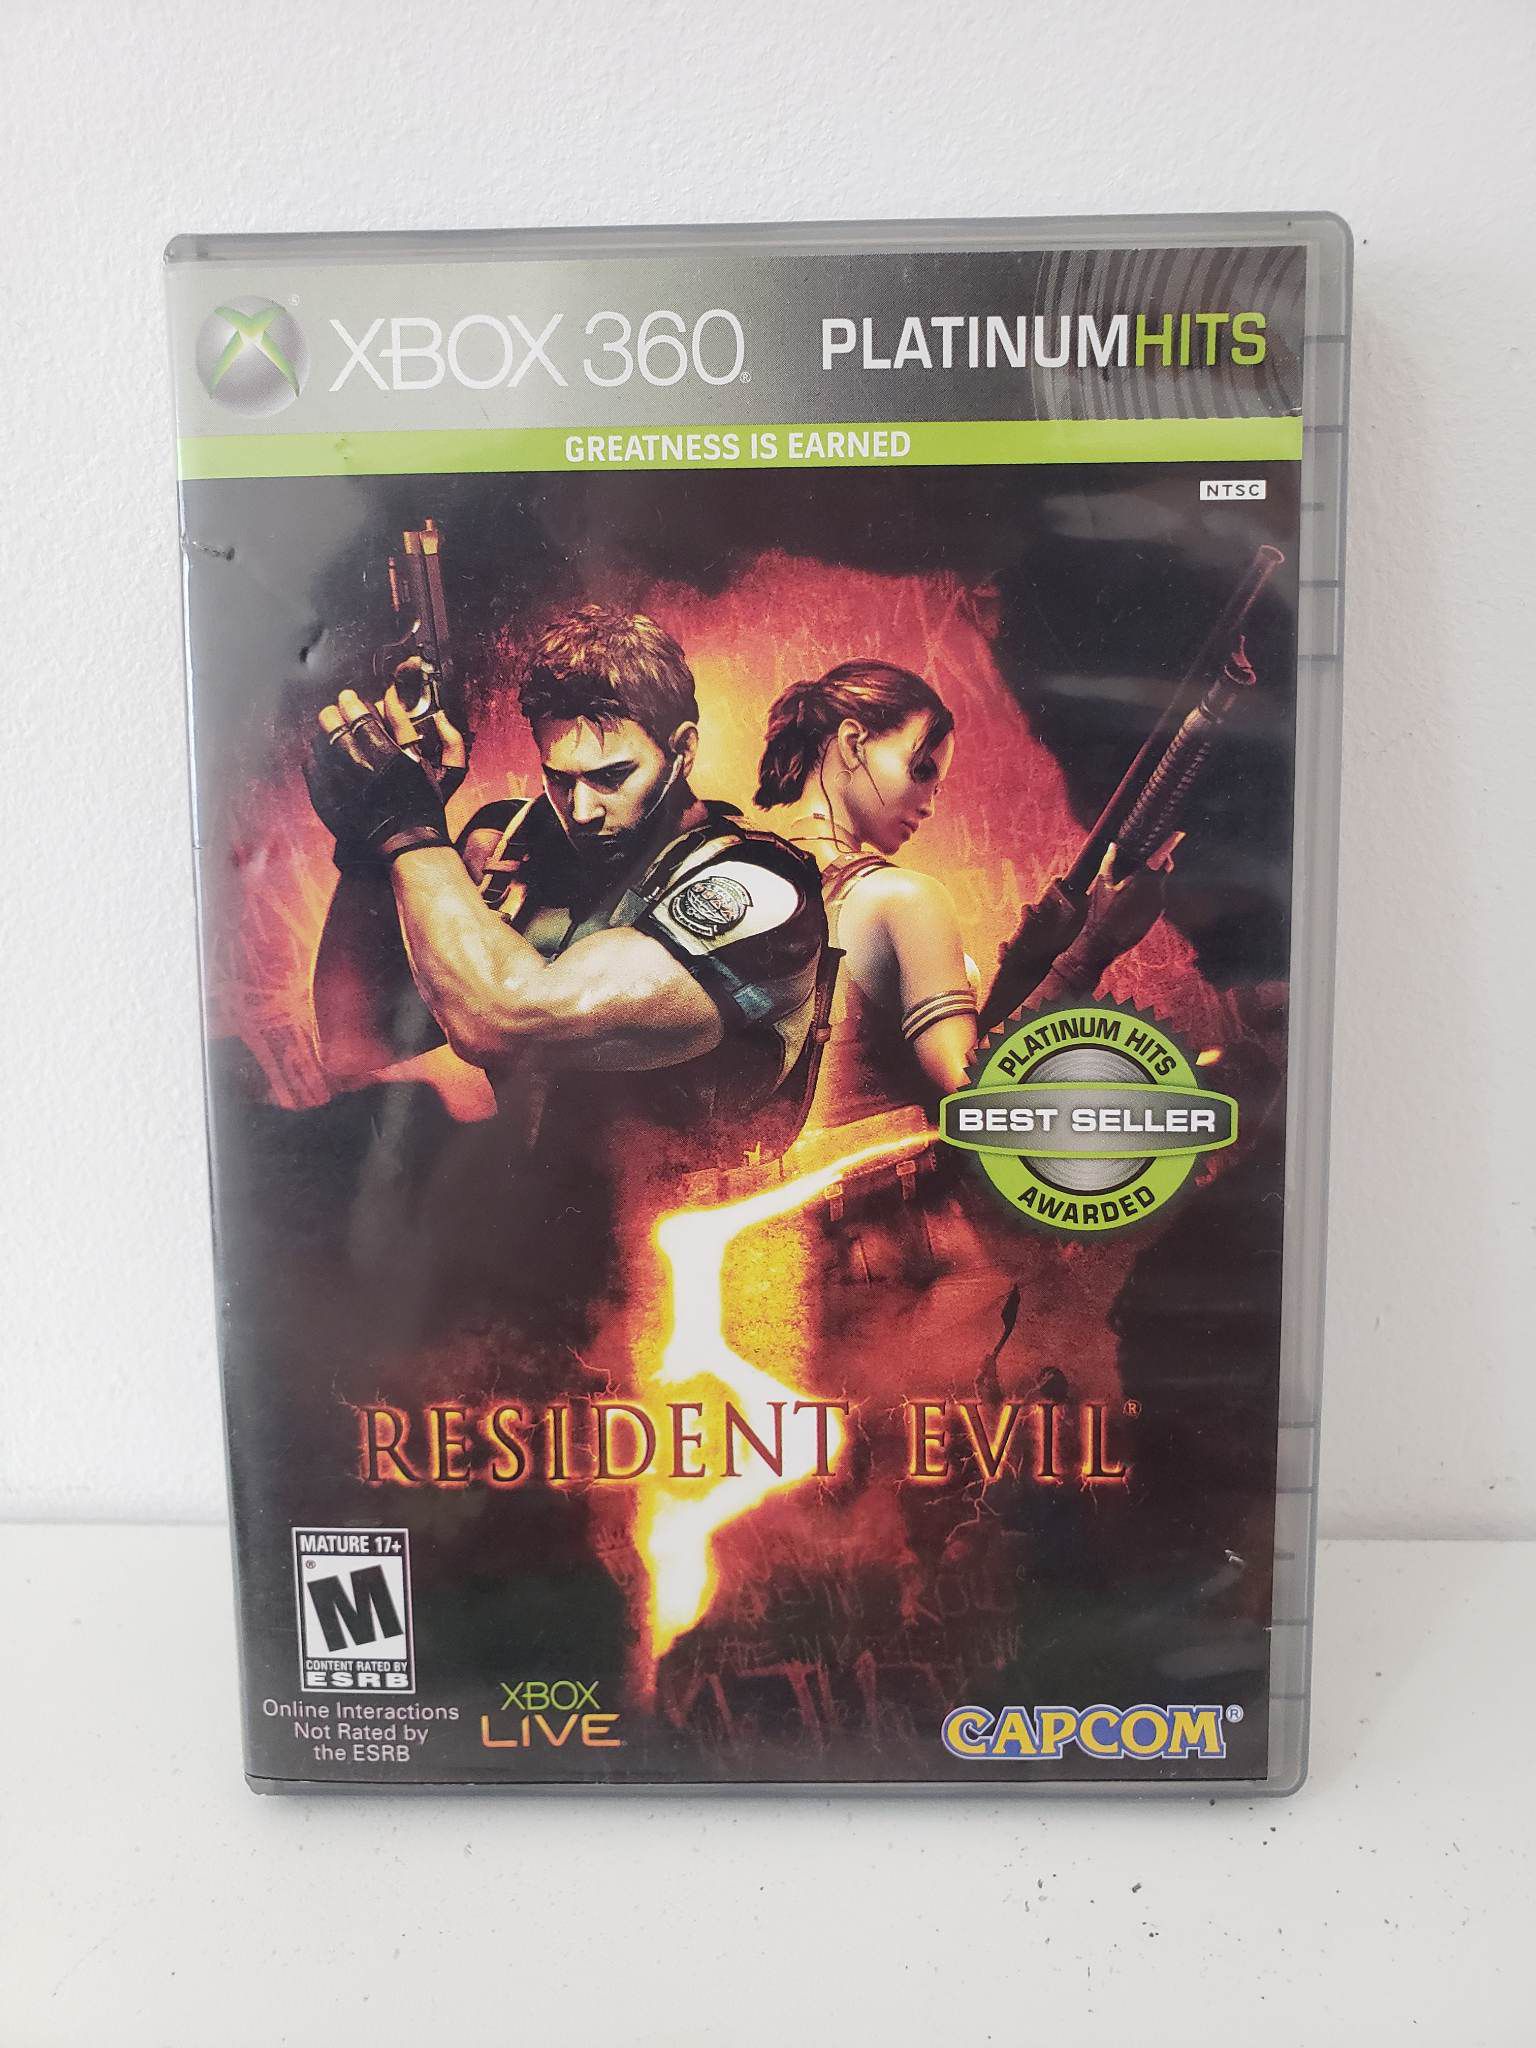 Resident Evil Revelations - Jogo XBOX 360 Mídia Física